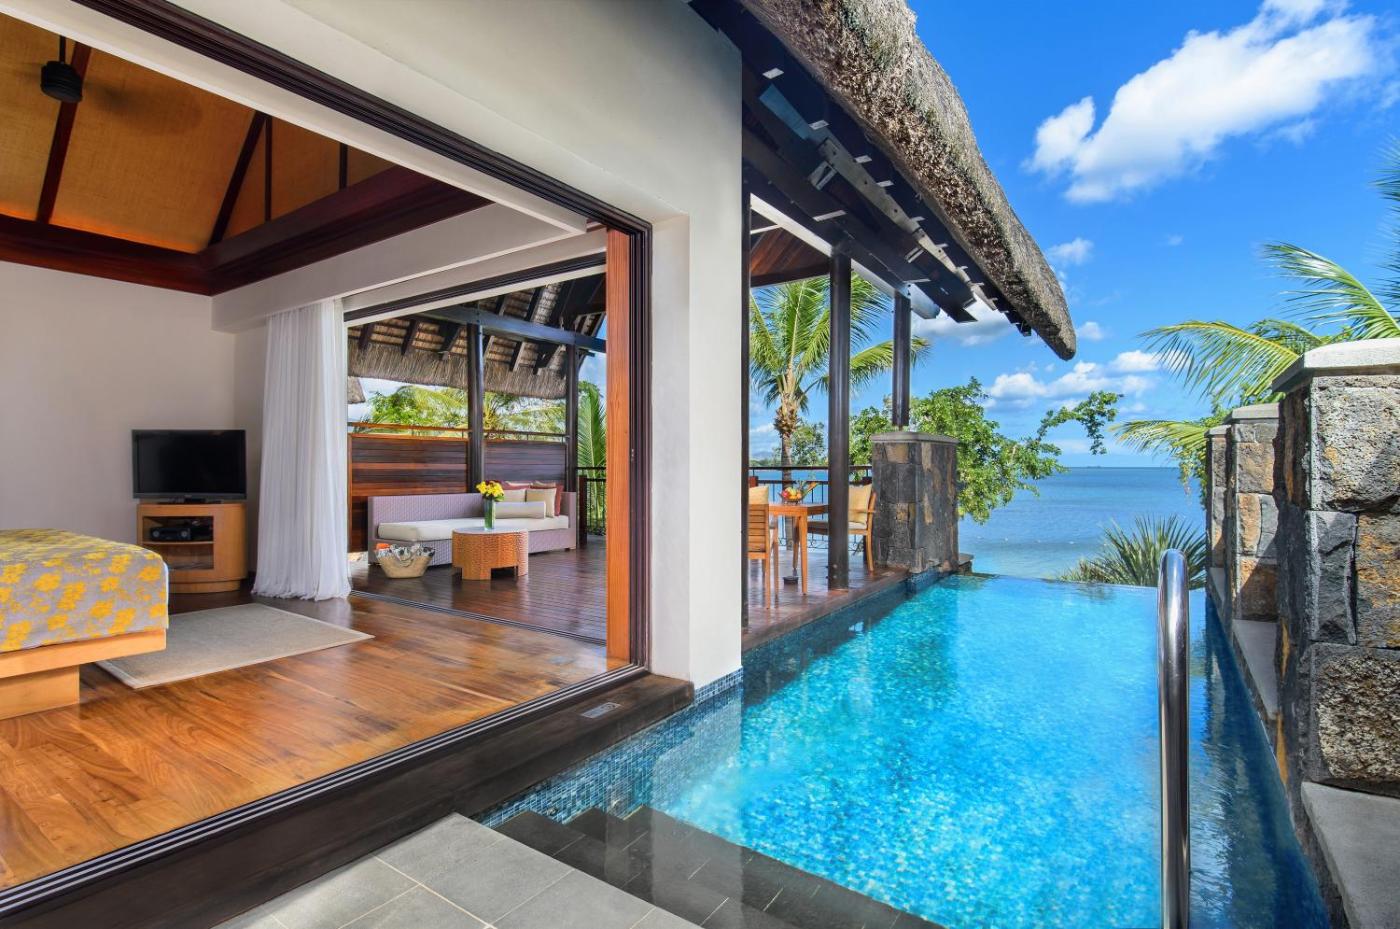 Hotel with private pool - Le Jadis Beach Resort & Wellness